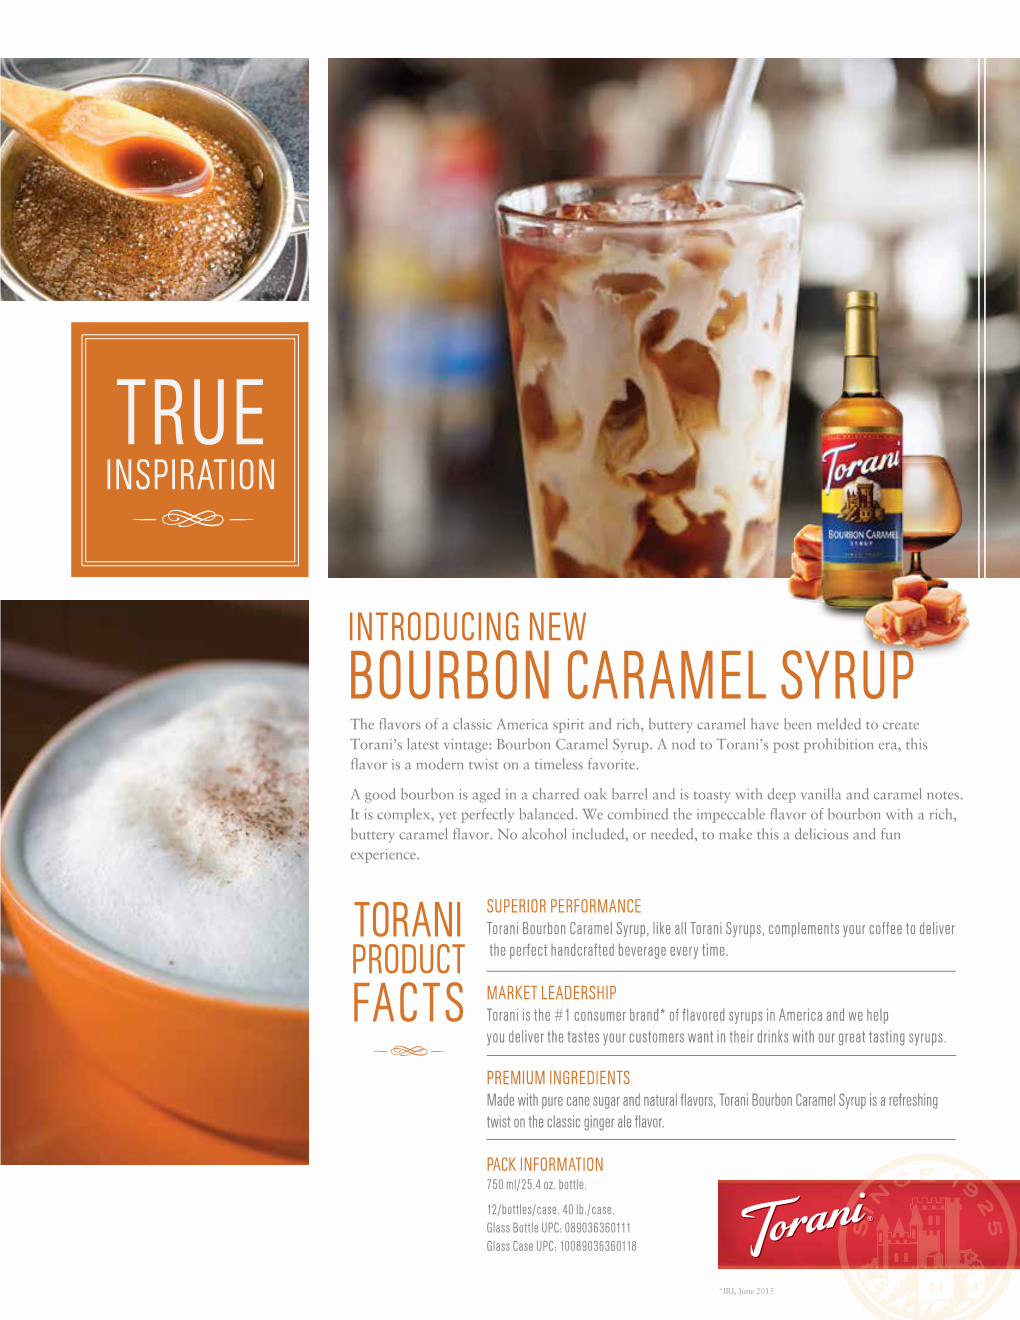 Bourbon Caramel Syrup